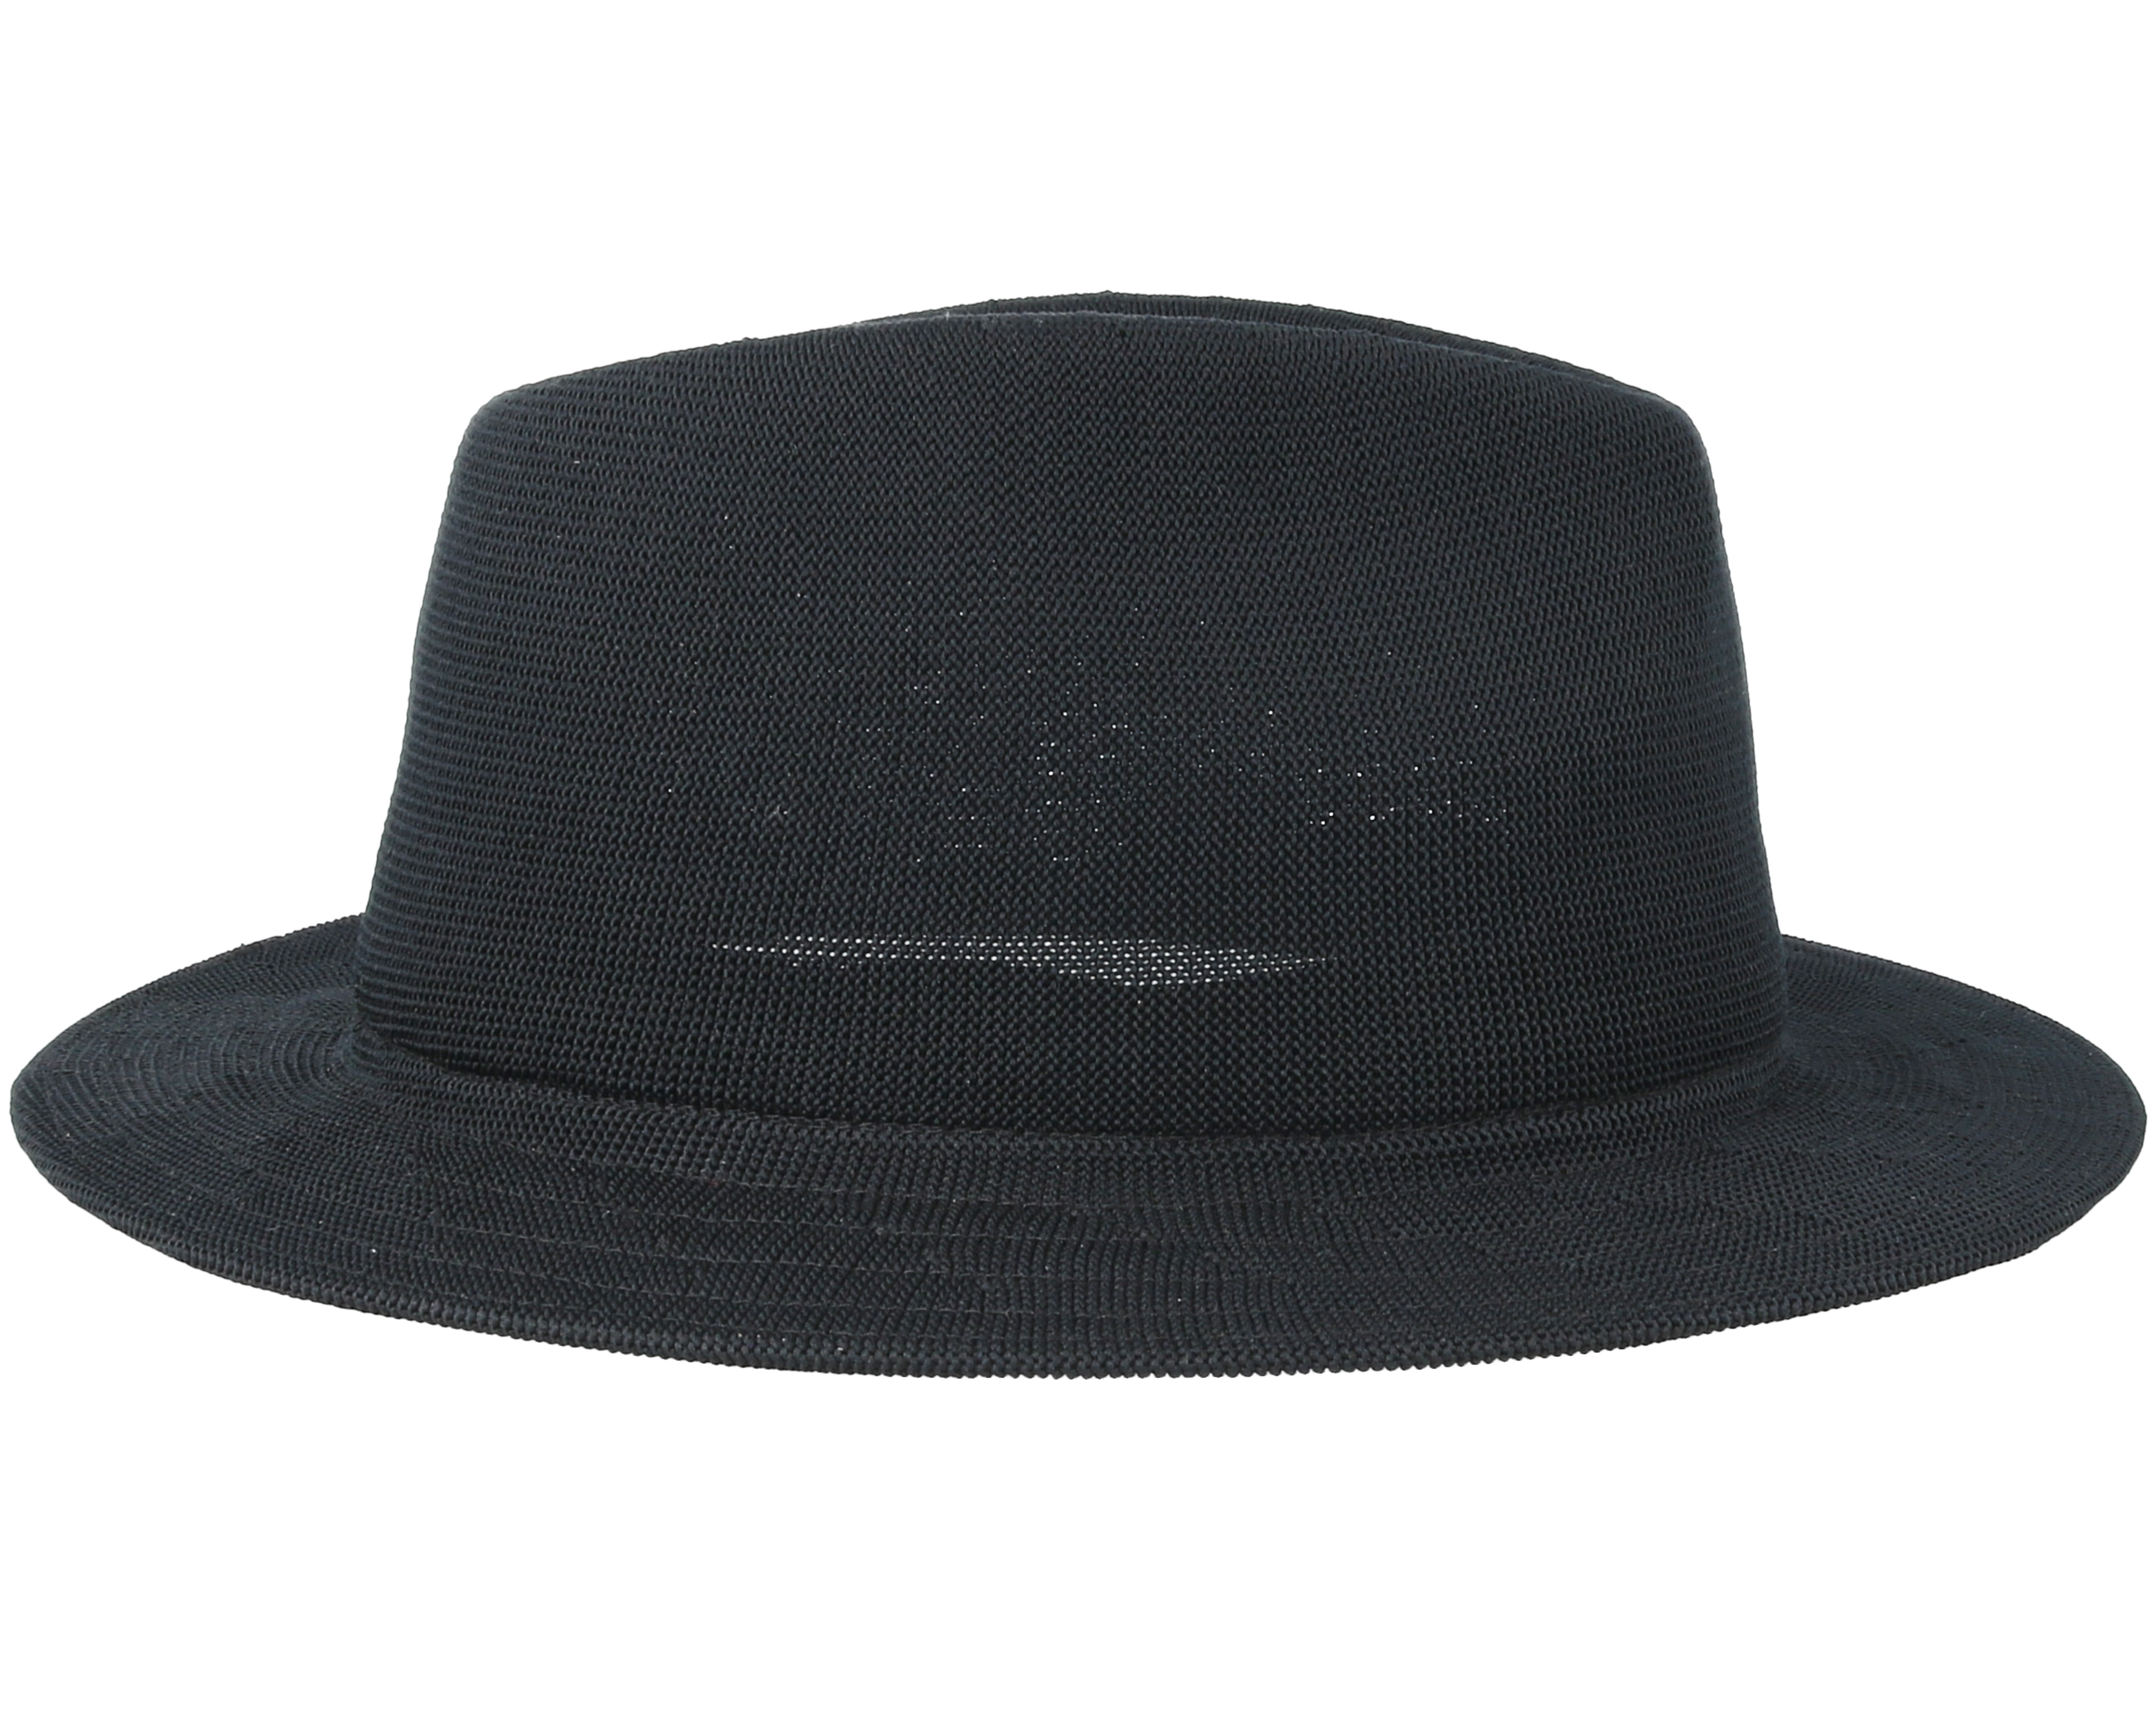 Baron Black Trilby - Kangol hats | Hatstore.co.uk